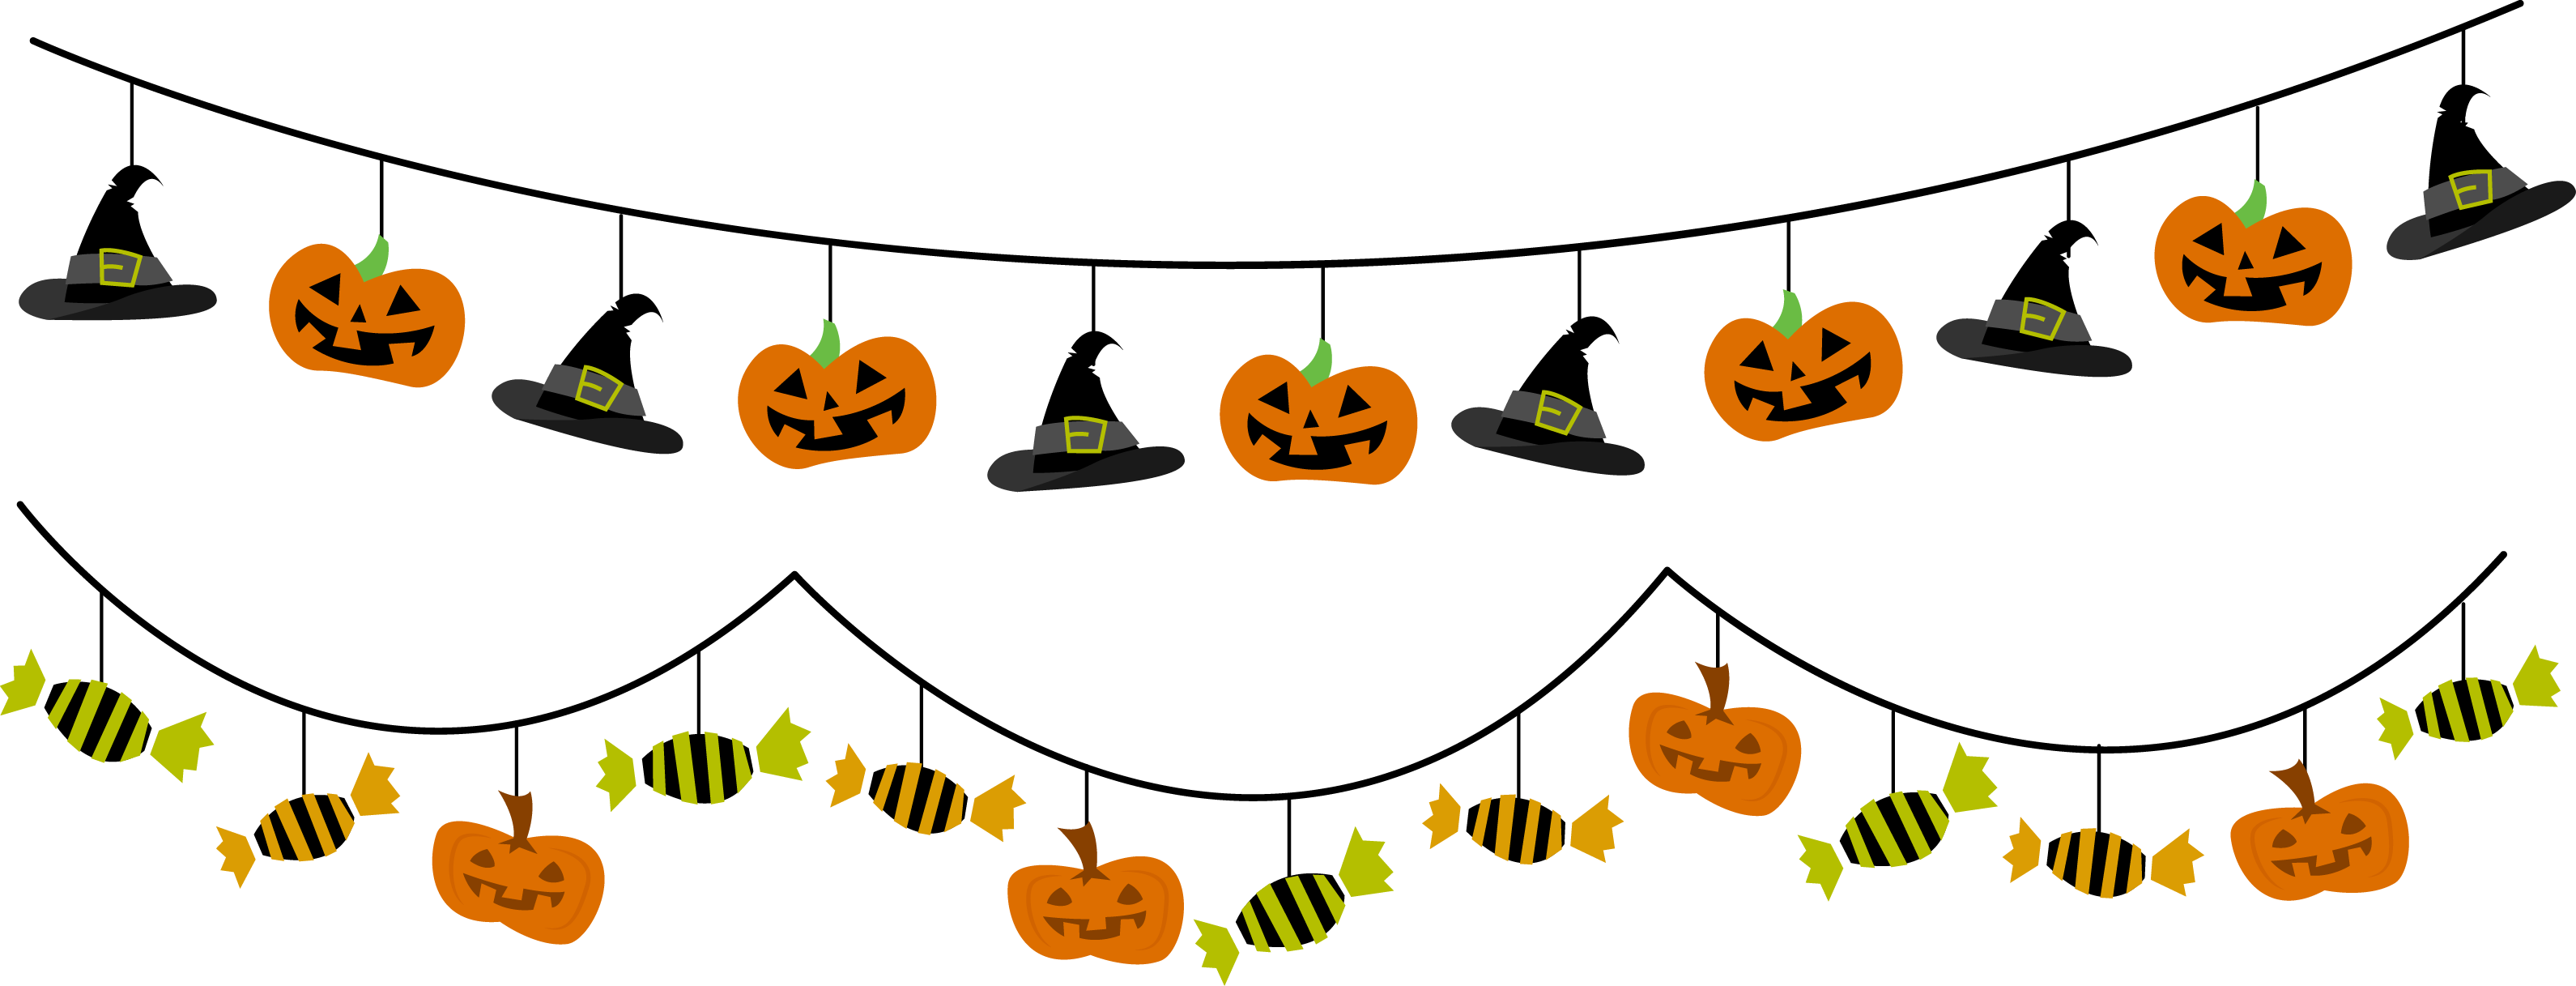 Halloween Garland Background PNG Image